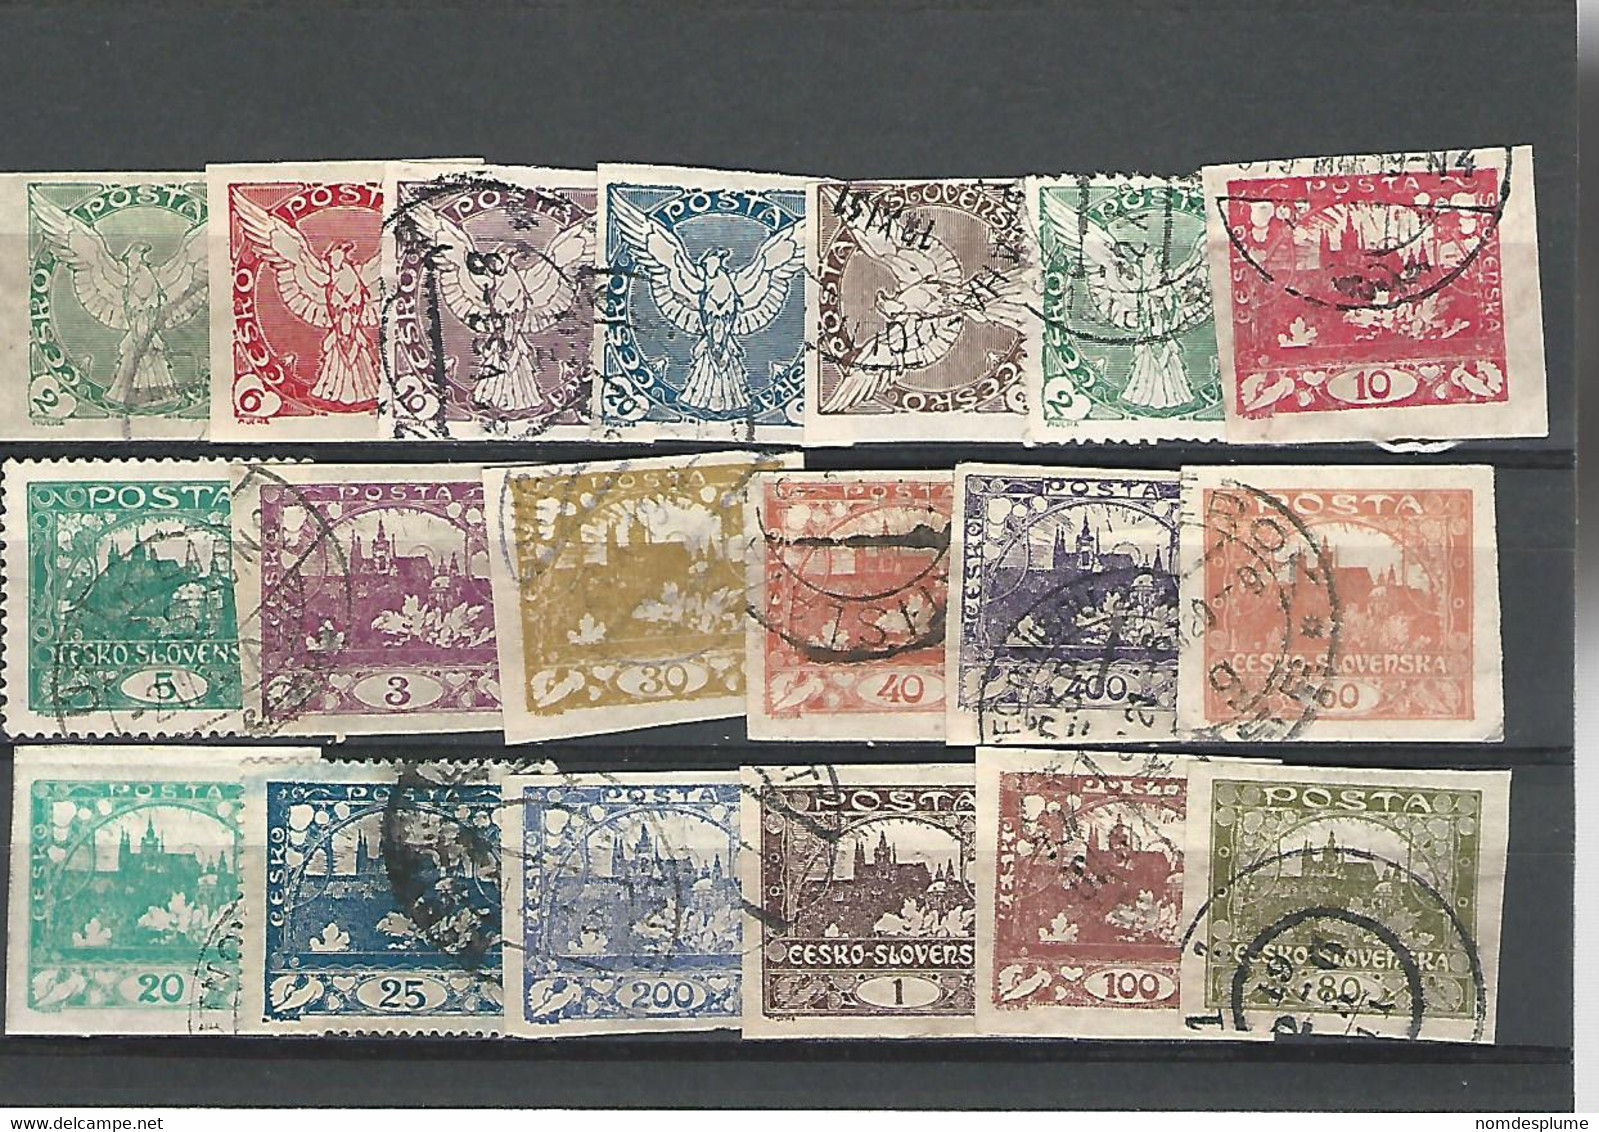 33752 ) Czechoslovakia Collection - Lots & Serien